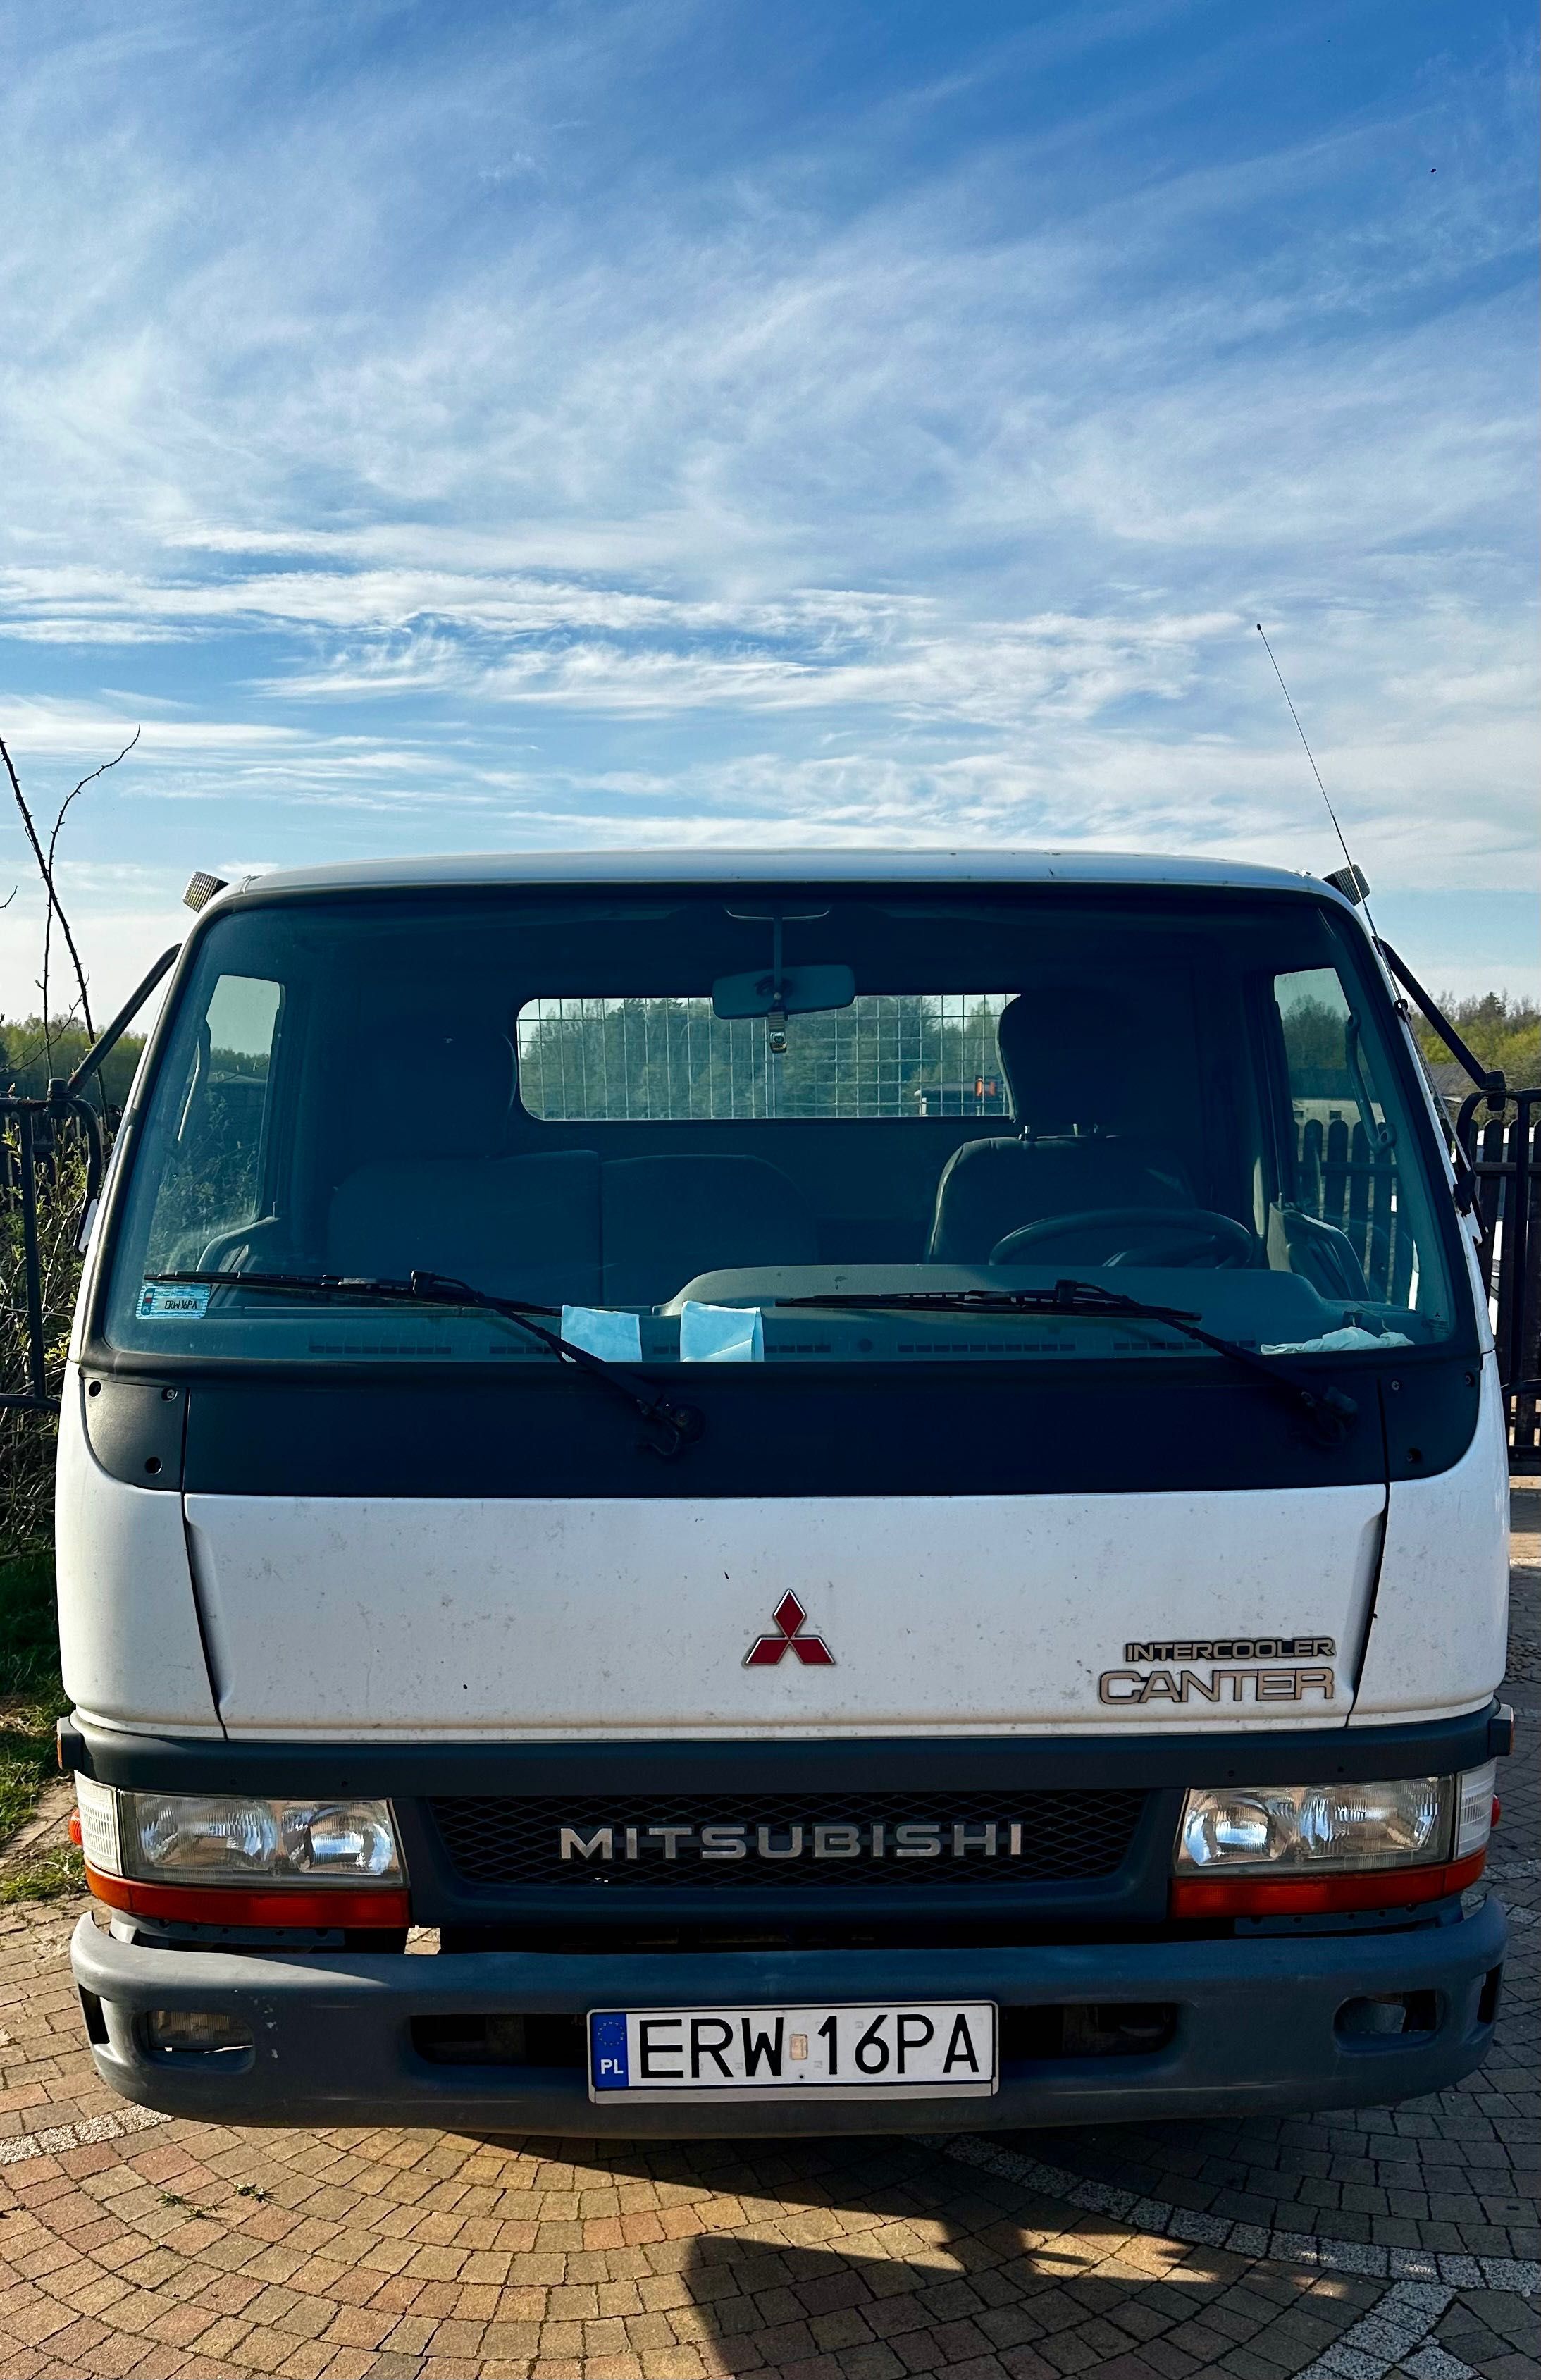 Mitsubishi Canter Wywrotka
2004 · 320 710 km · 2 977 cm3 · Diesel katB